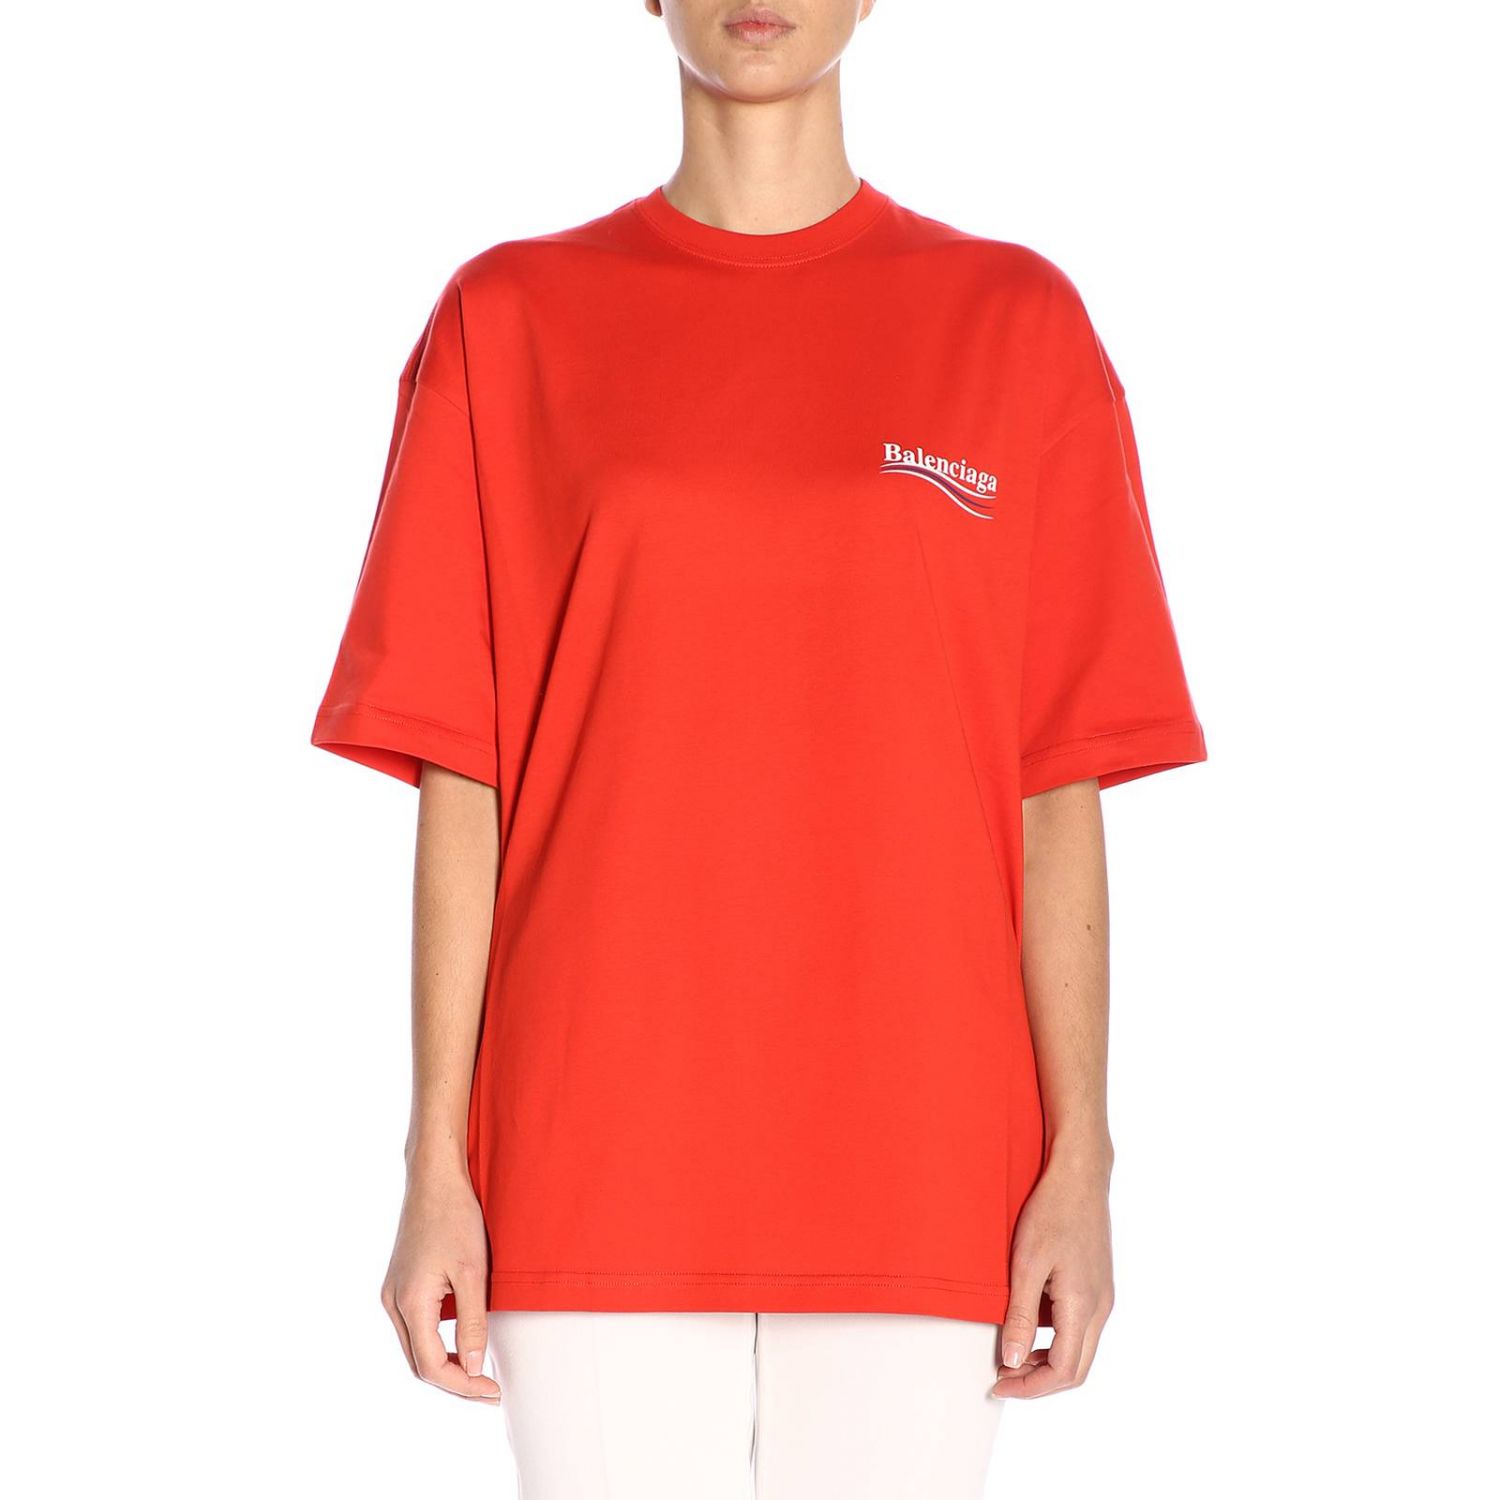 Balenciaga Outlet: T-shirt women | T-Shirt Balenciaga Women Red | T ...